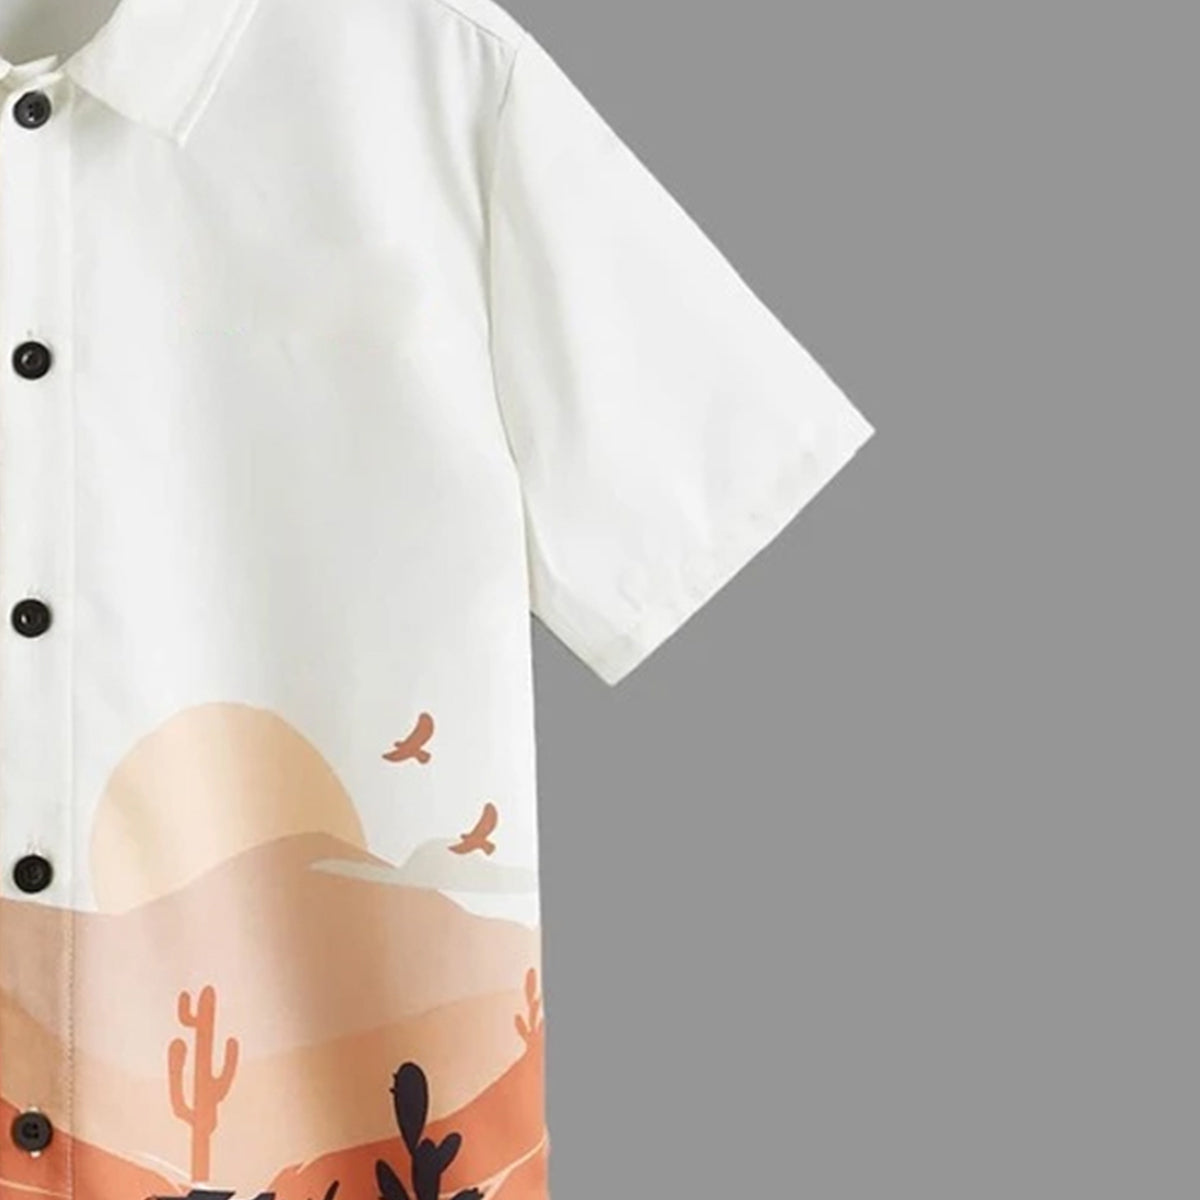 Venutaloza Stylish Colourful Graphic Designer ((Combo pack For 6)) Shirt For Boys.